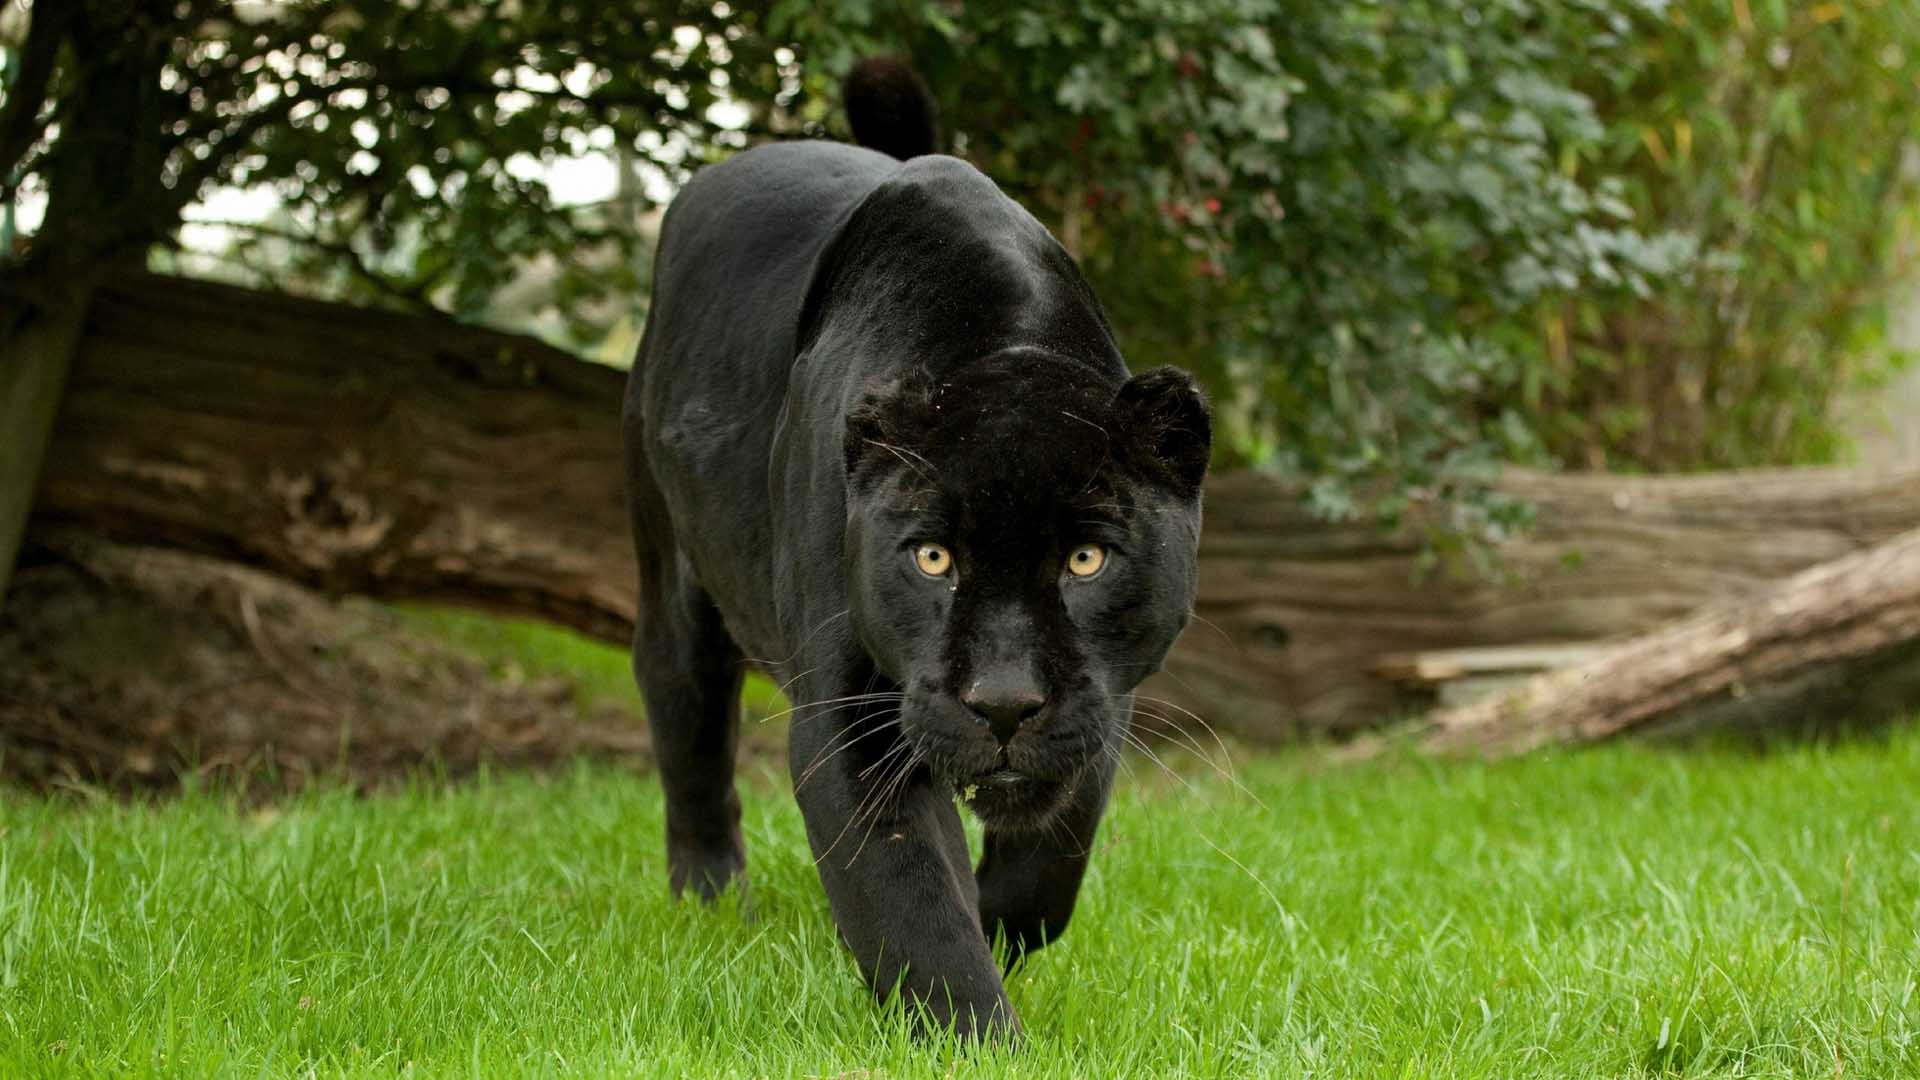 Black Jaguar Panther Image